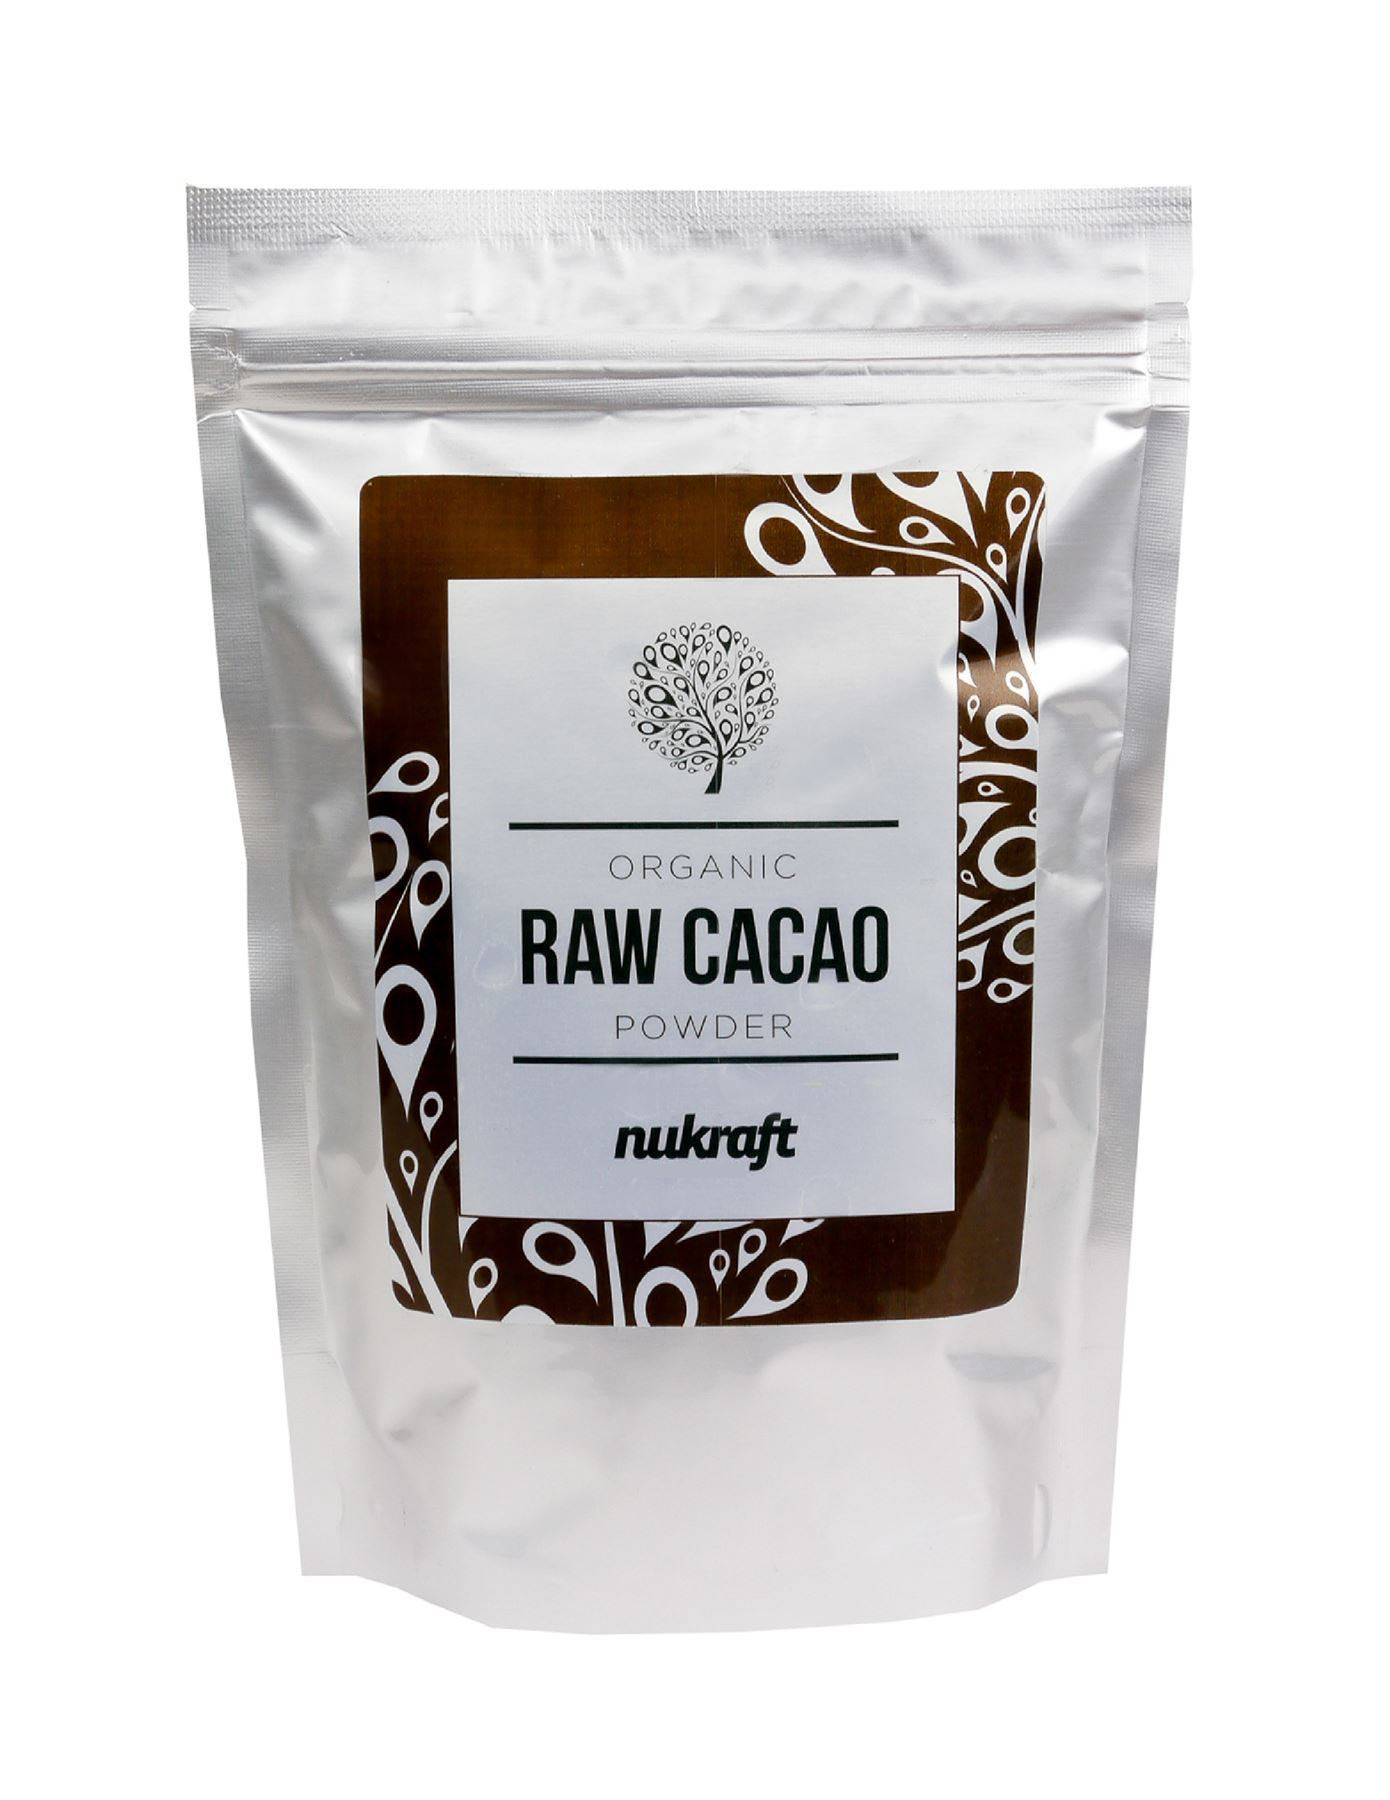 Organic Cocoa Powder
 1kg CACAO COCOA powder organic raw Peruvian variety